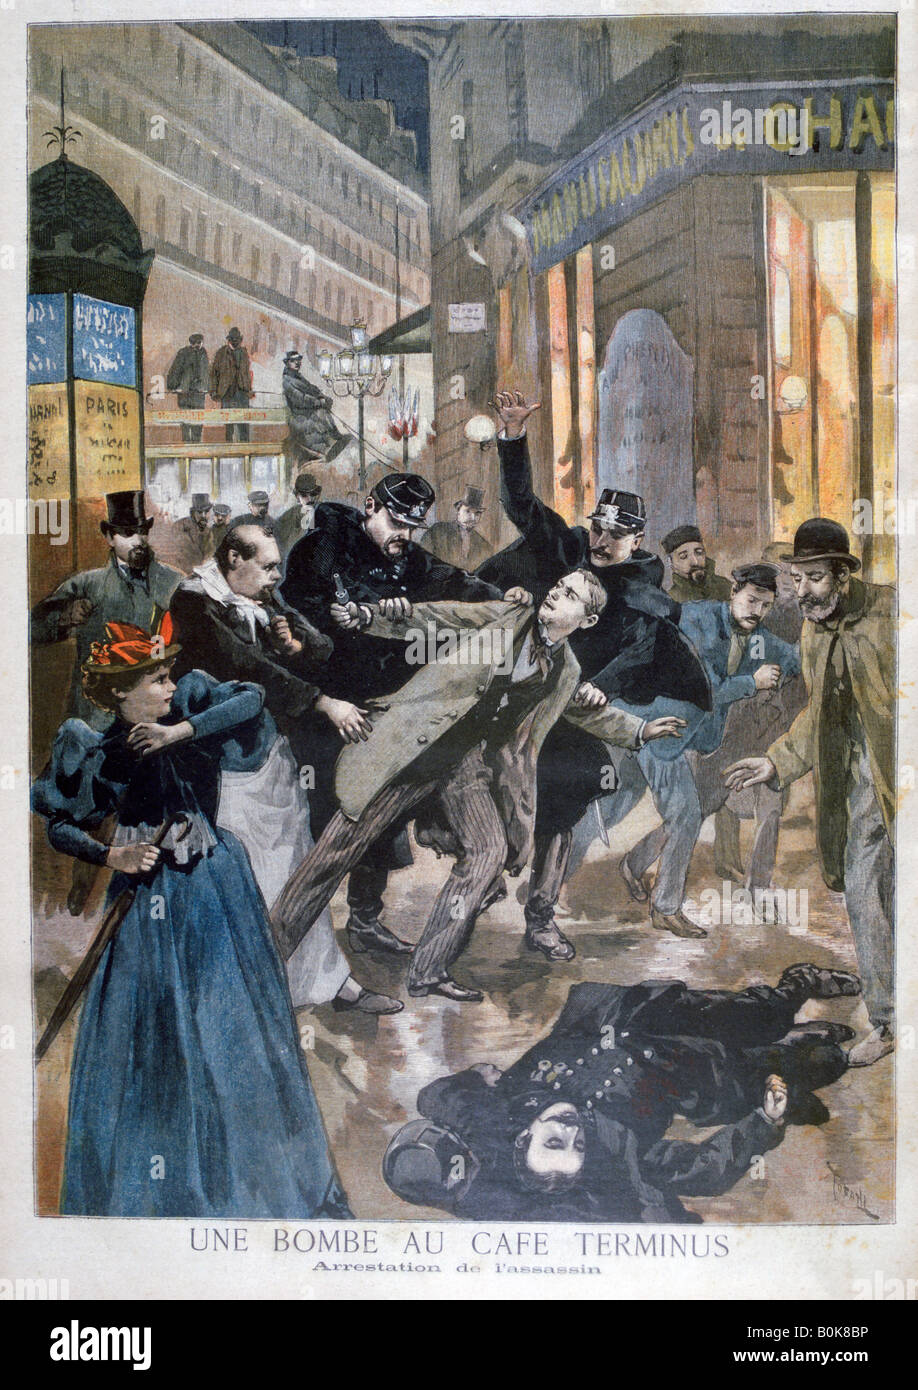 Arresto del Café Terminus bombardiere, Paris, 1894. Artista: Oswaldo Tofani Foto Stock